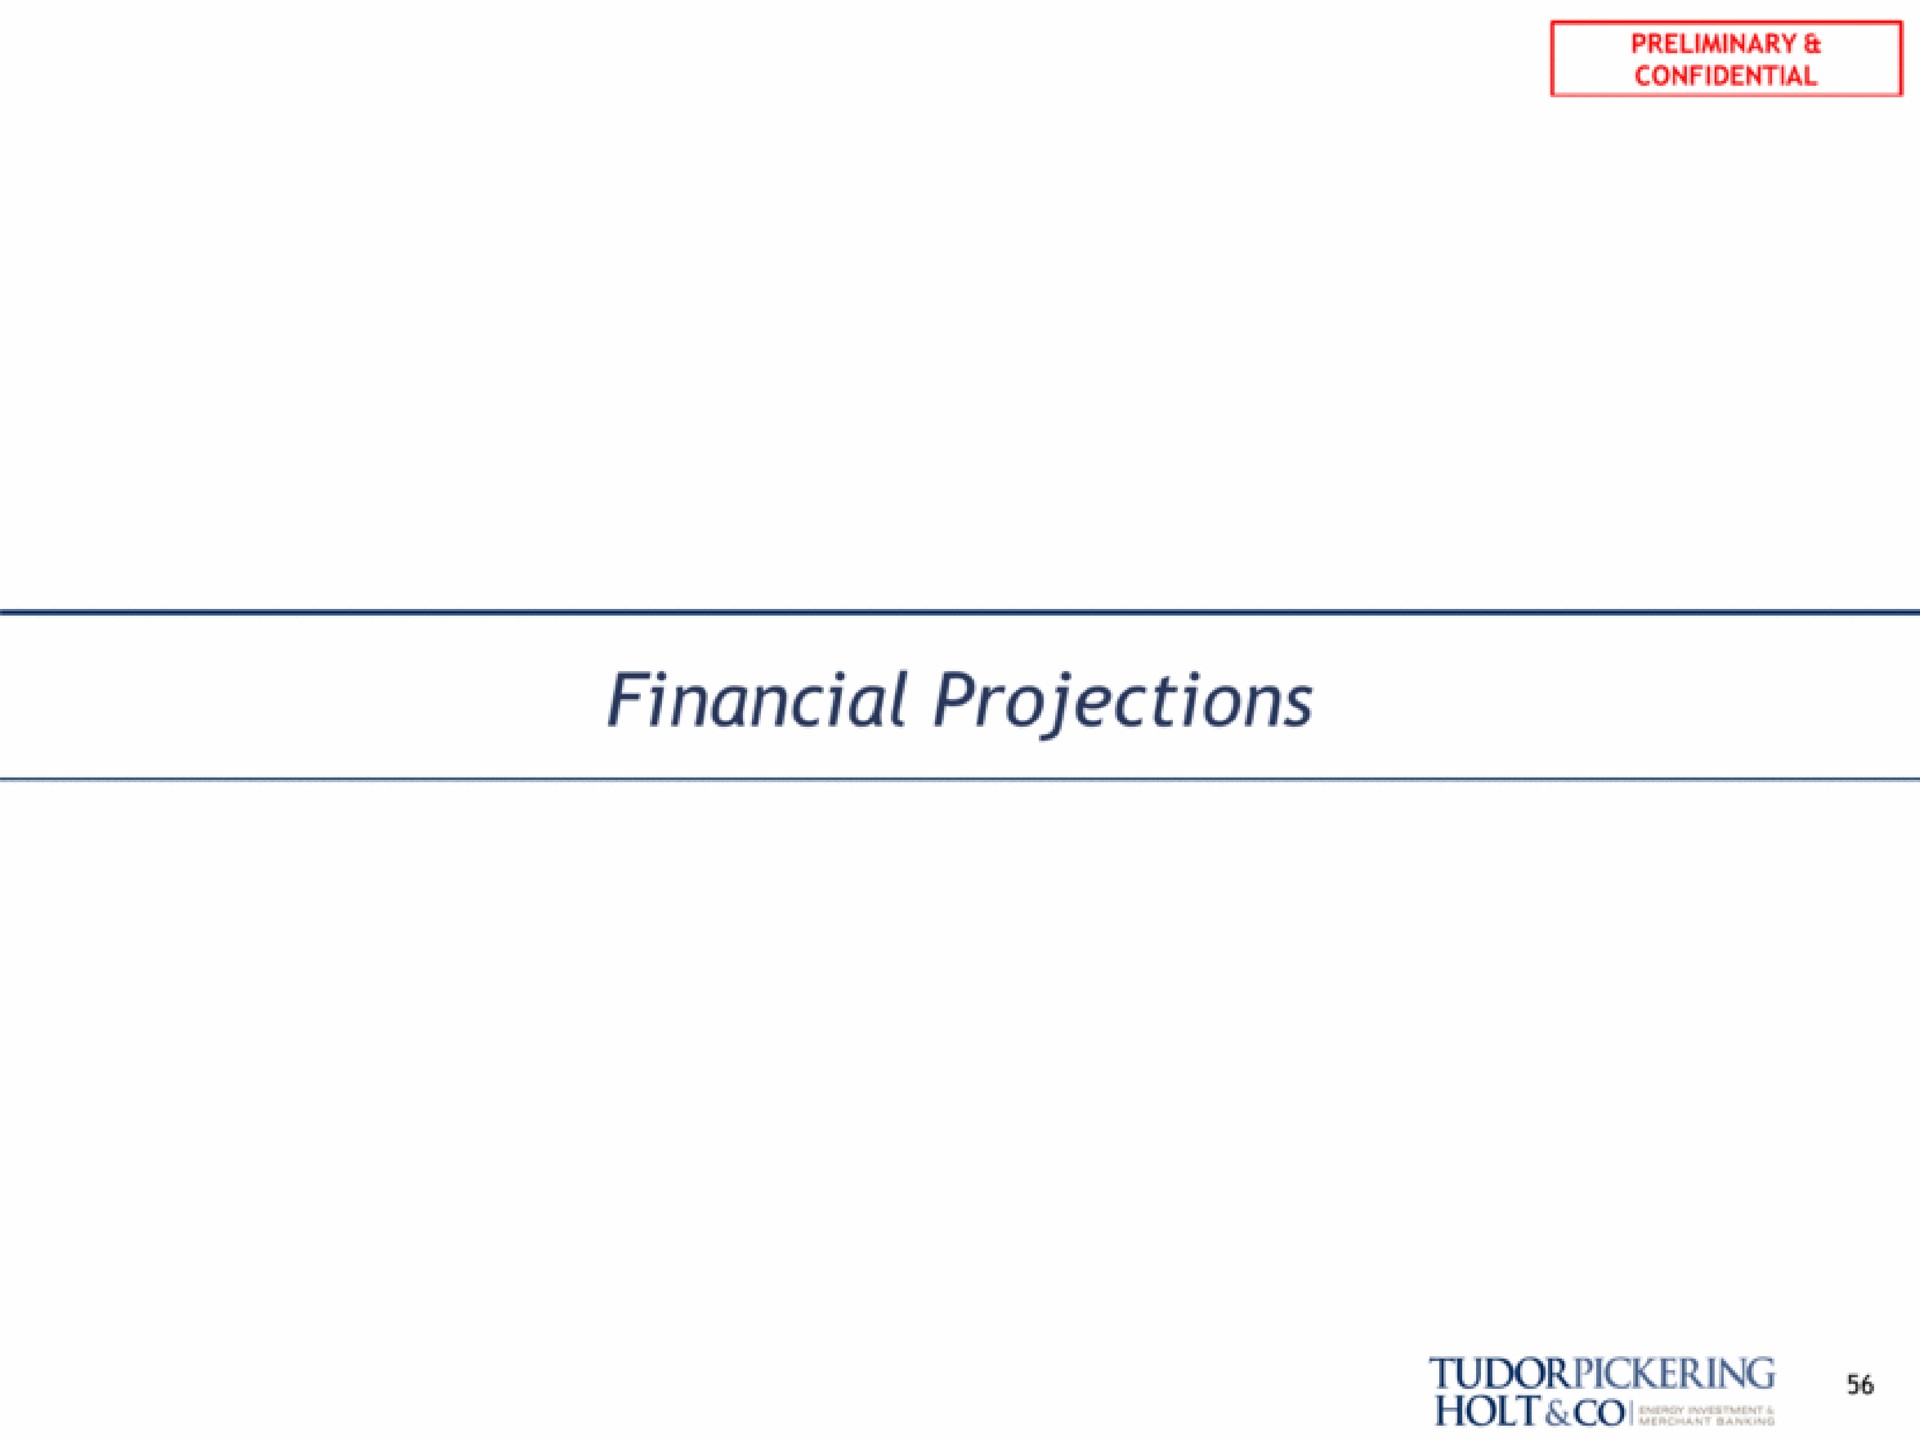 financial projections holt | Tudor, Pickering, Holt & Co